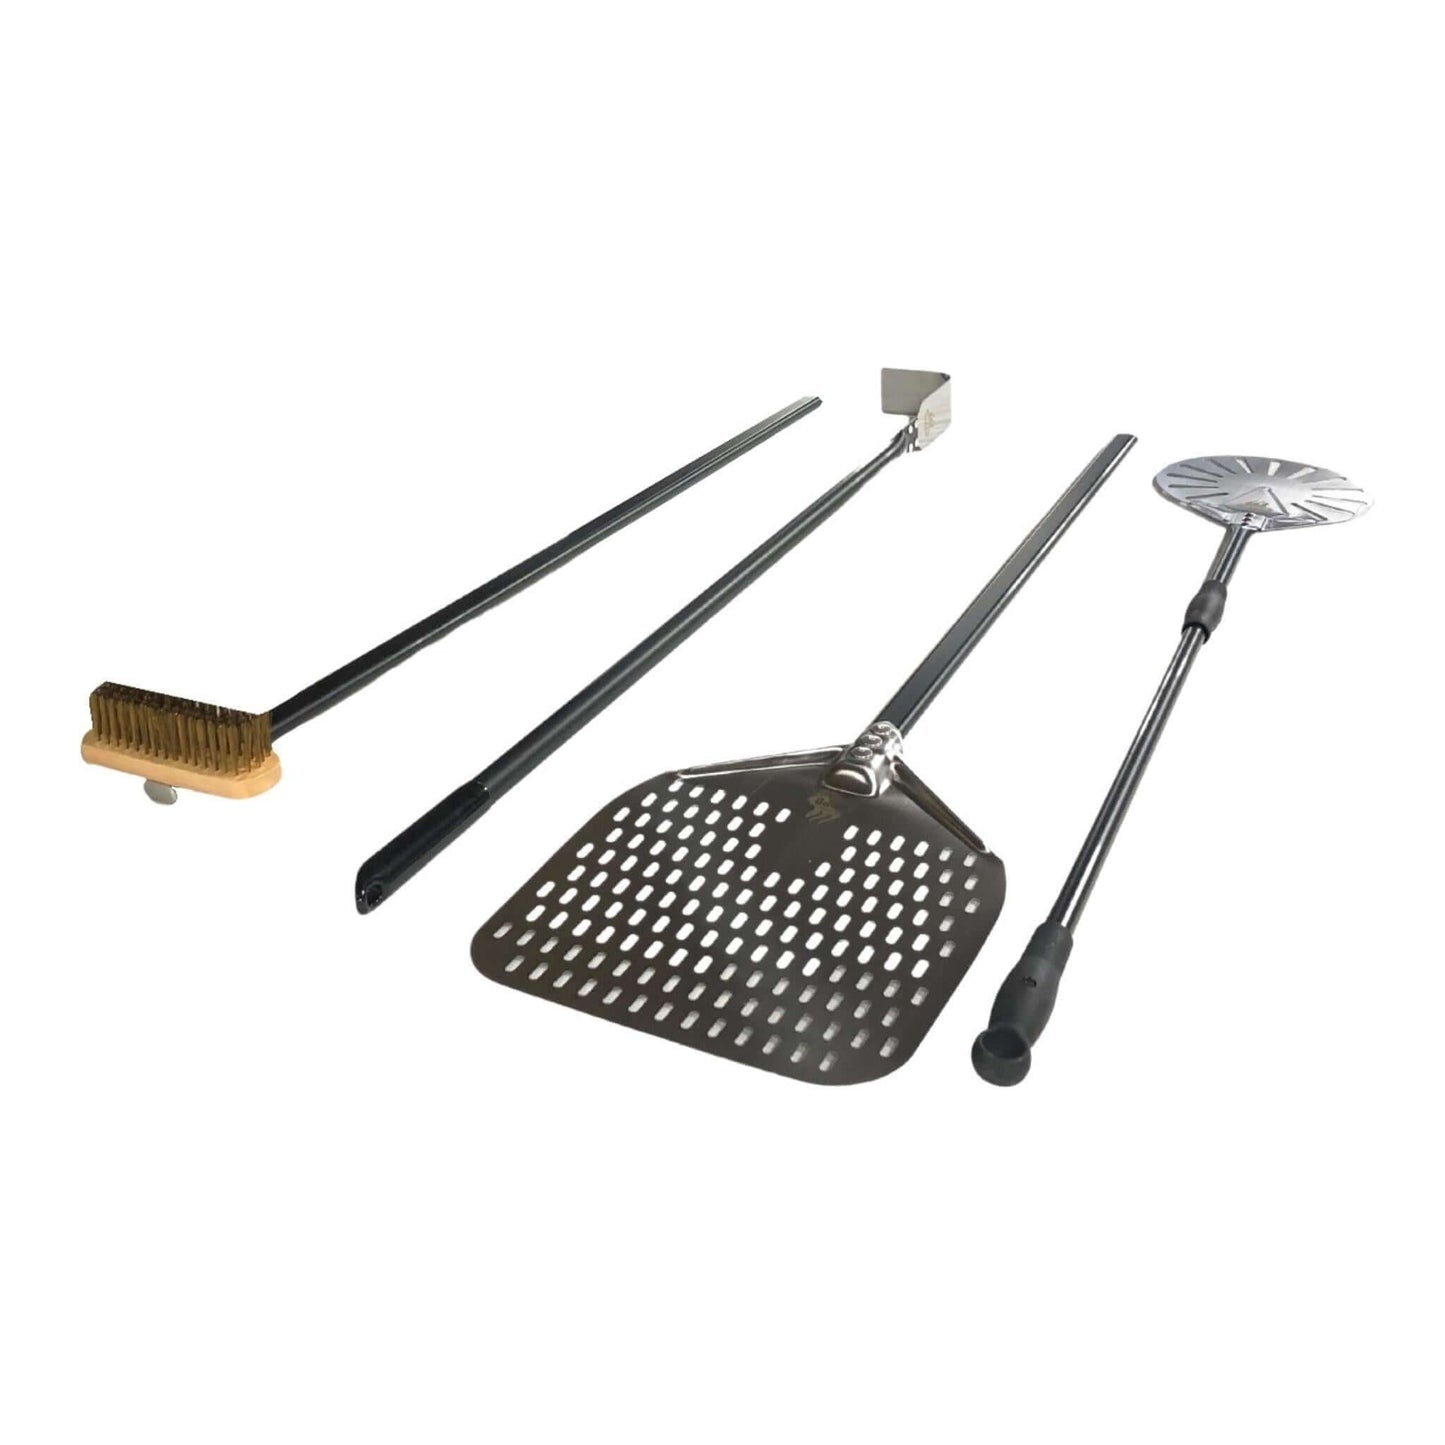 Pro 4 Piece, Aluminum handles, Wood Fired Pizza Oven Utensil Kit